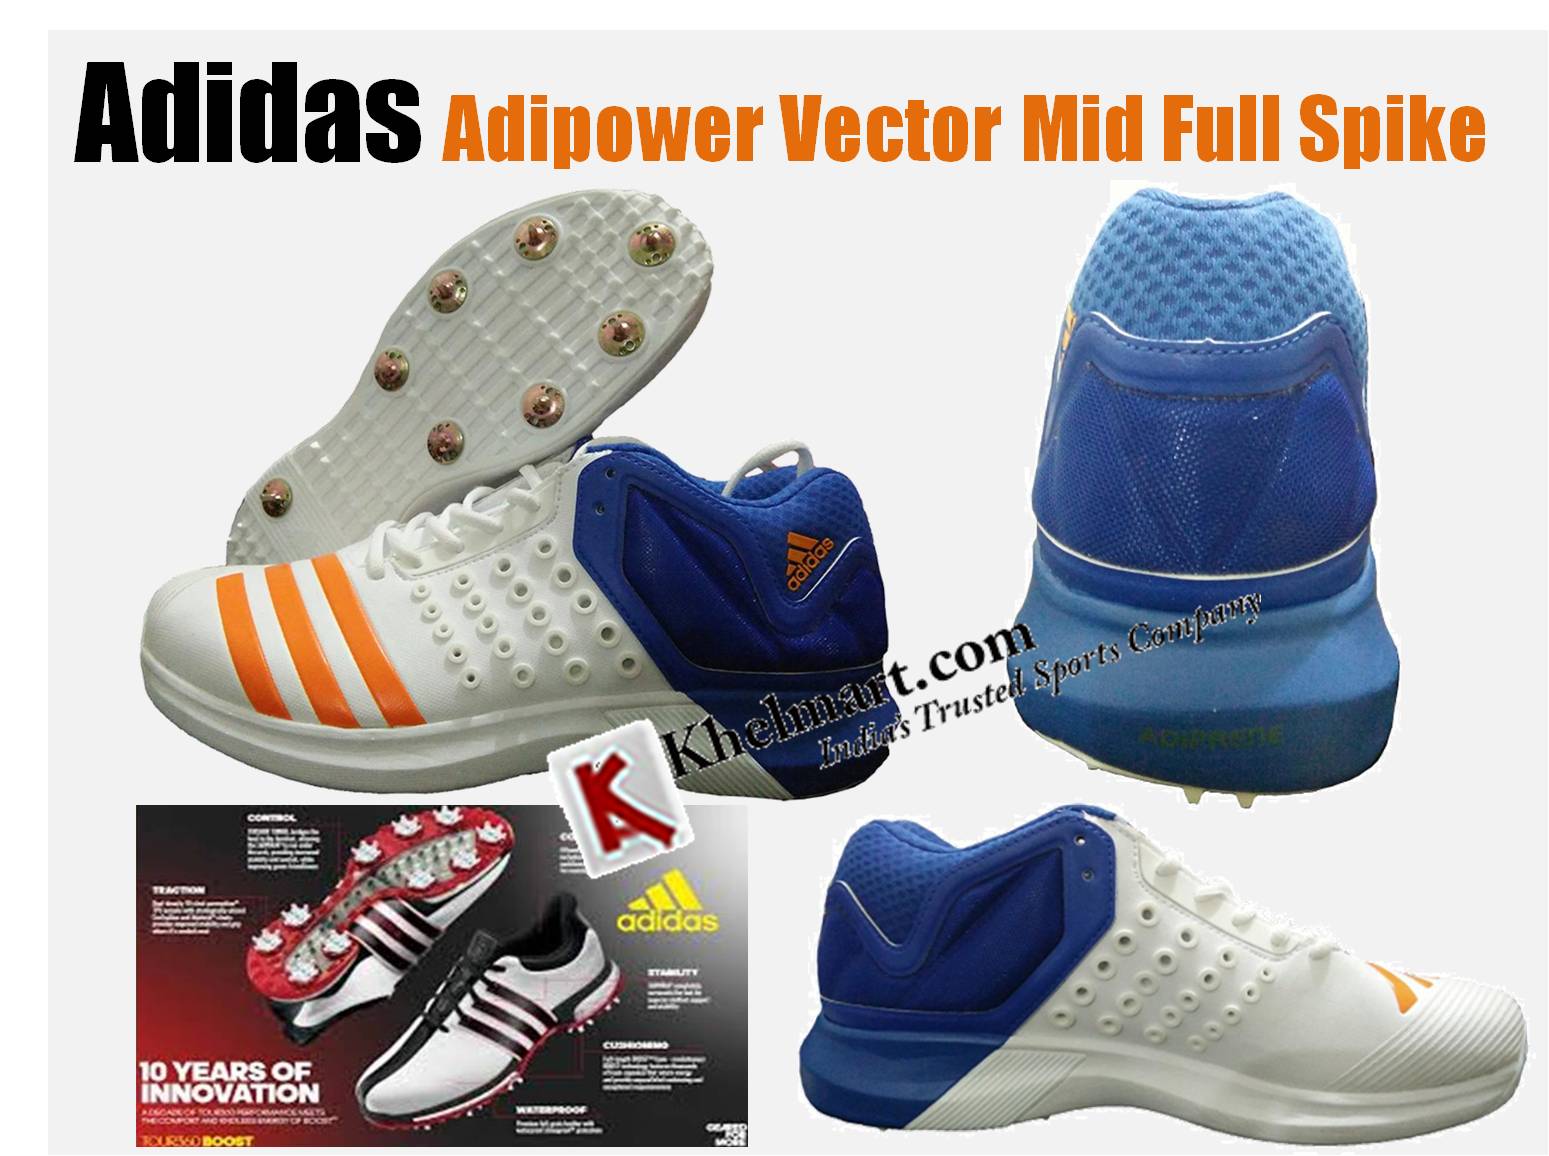 ADIDAS_ADIPOWER_VECTOR_MID_Spike_shoes.jpg 